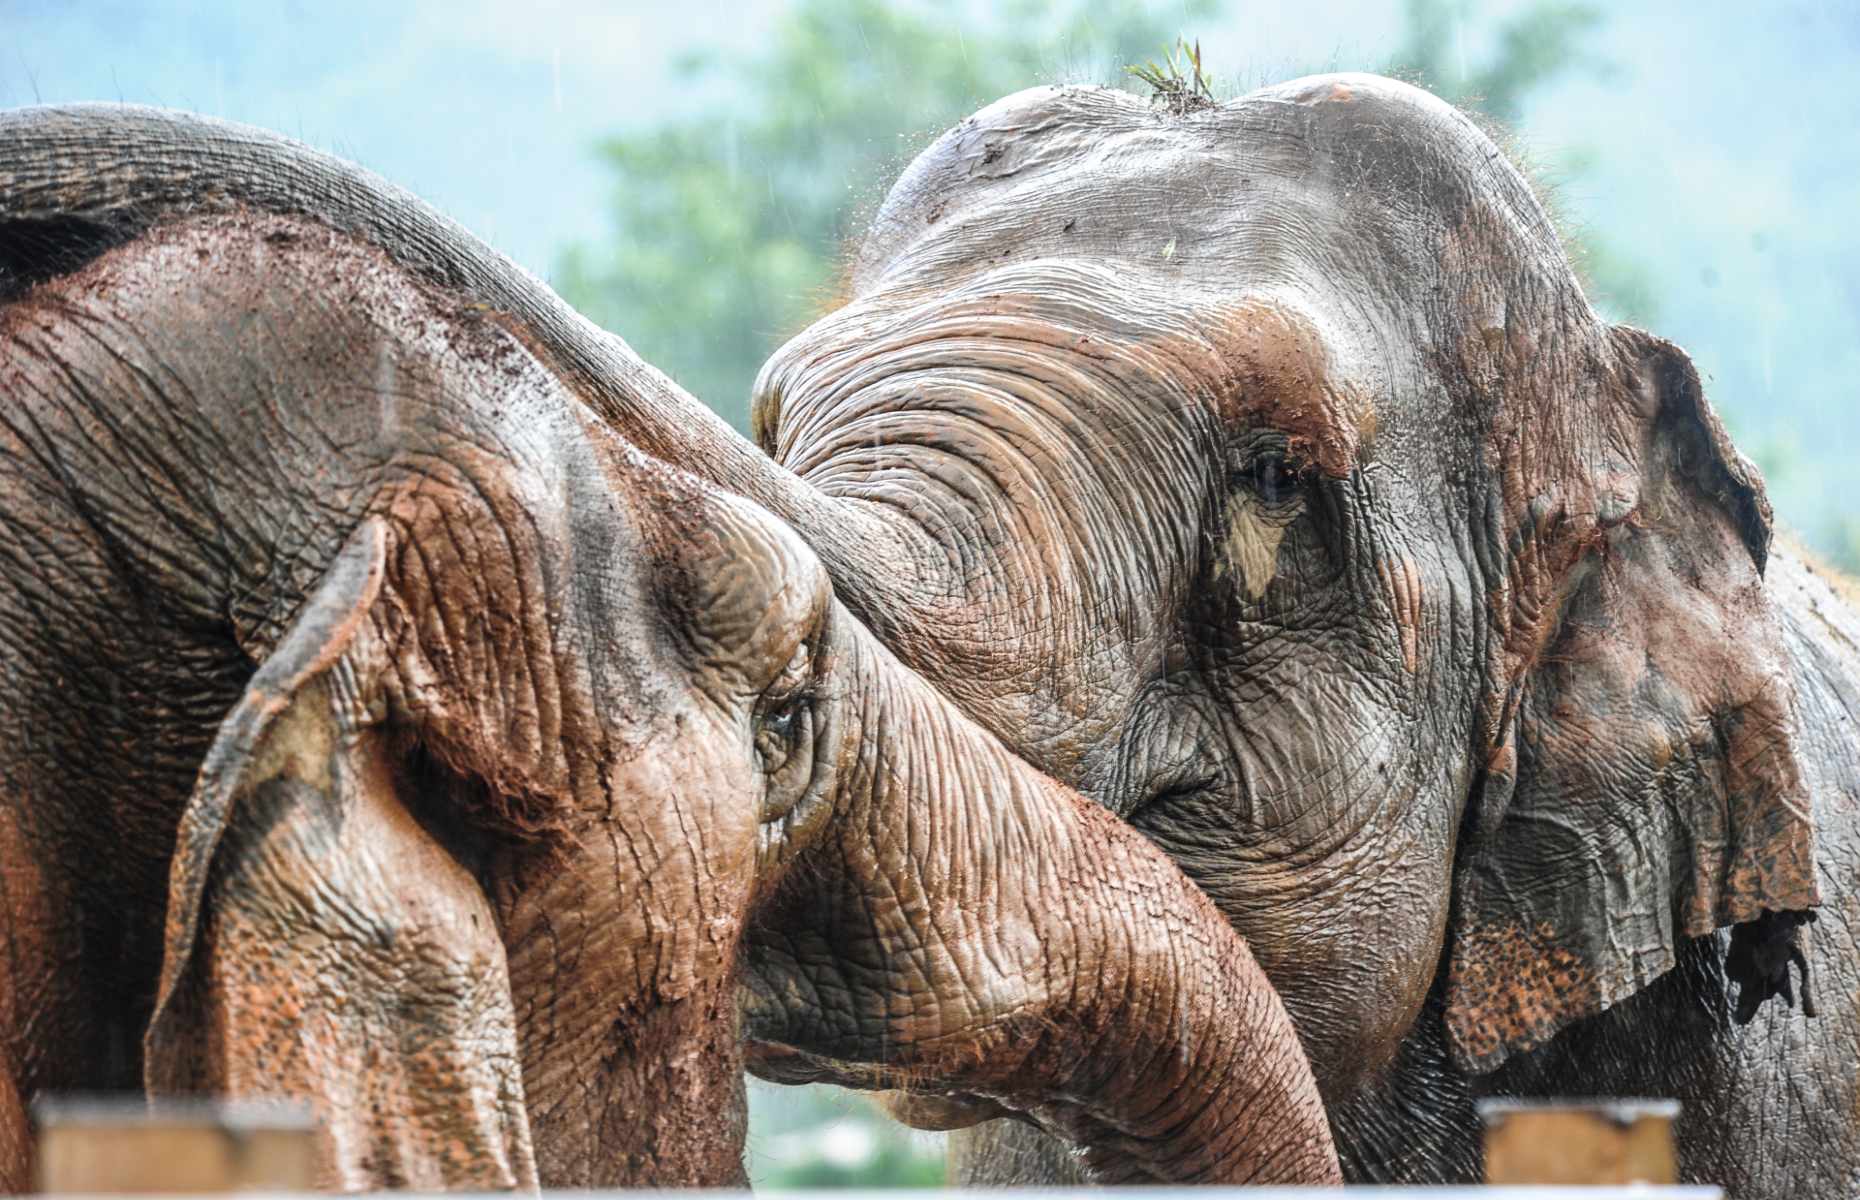 Elephant love at Elephant Nature Park (Image: Mark Stratton)